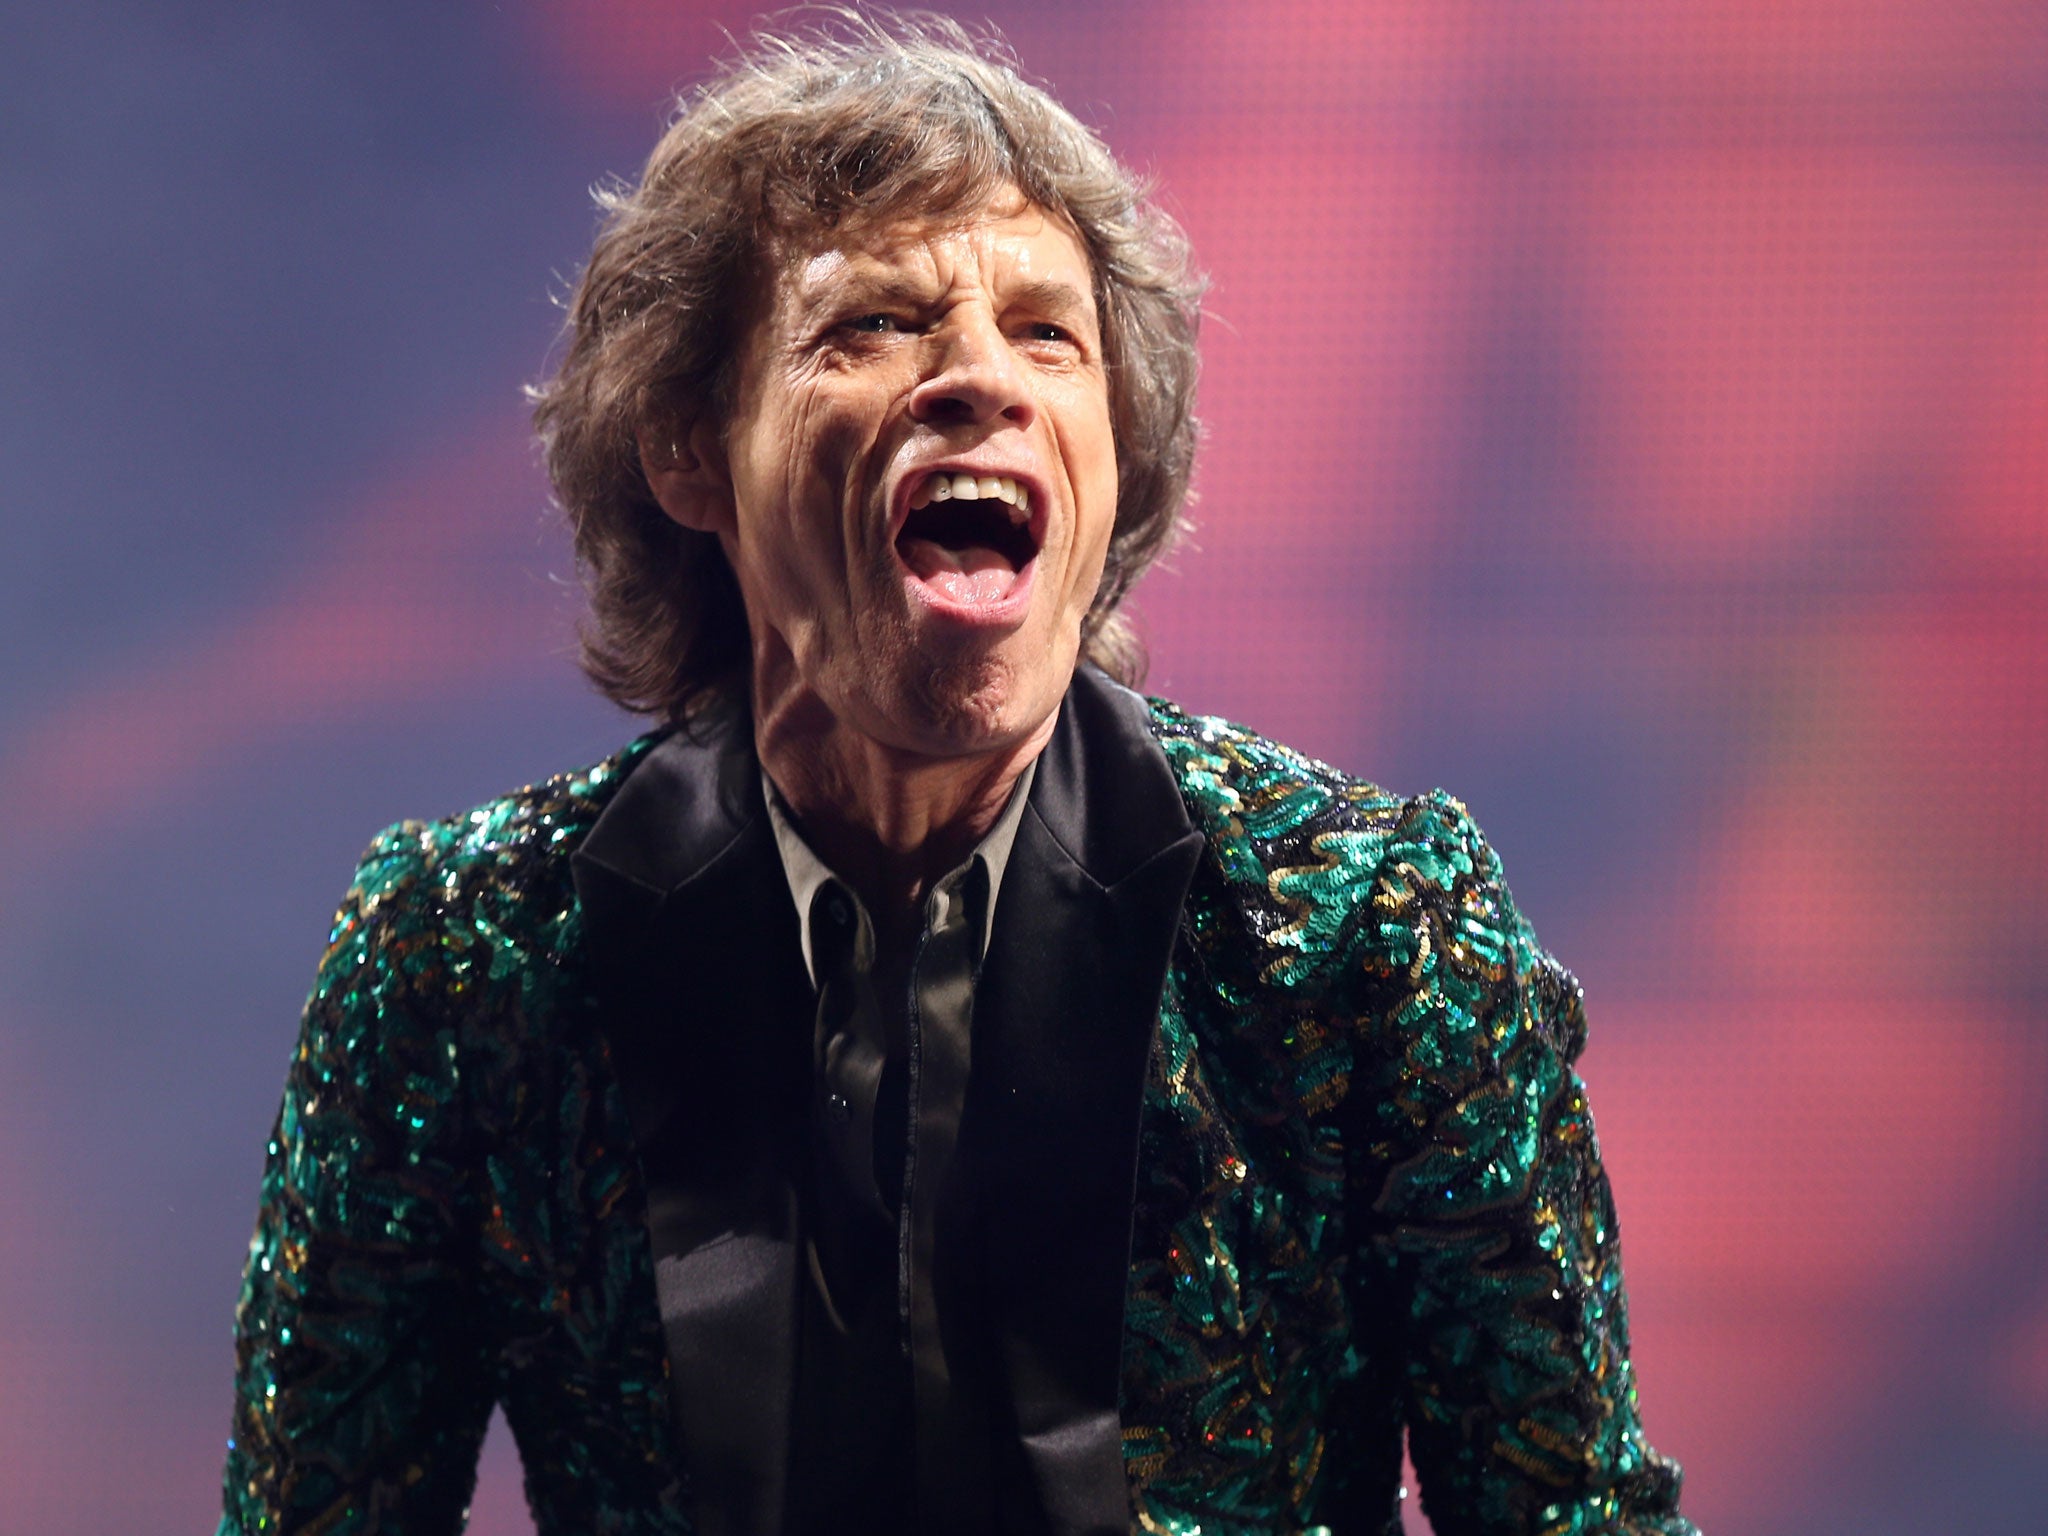 Mick Jagger performing at Glastonbury